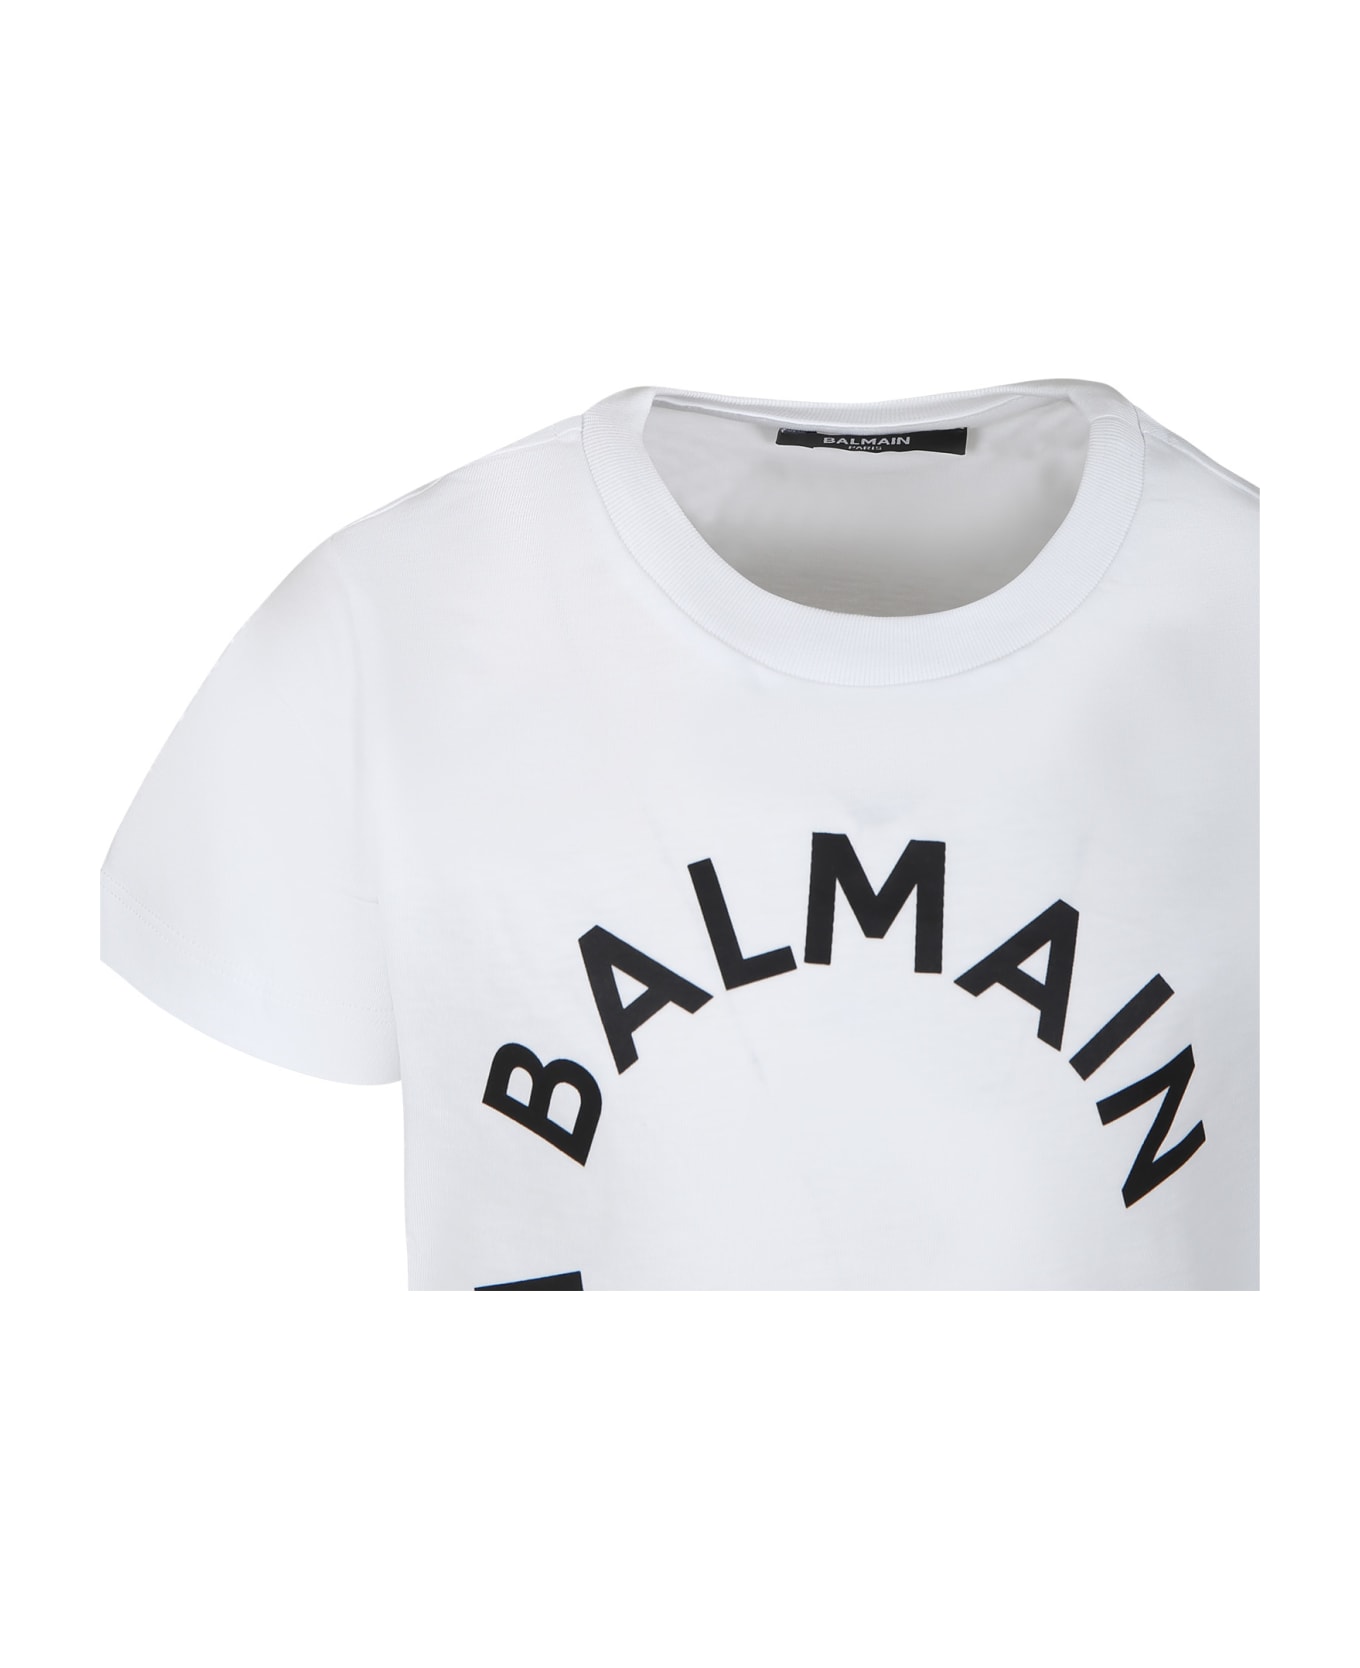 Balmain White T-shirt For Kids With Logo - White/black